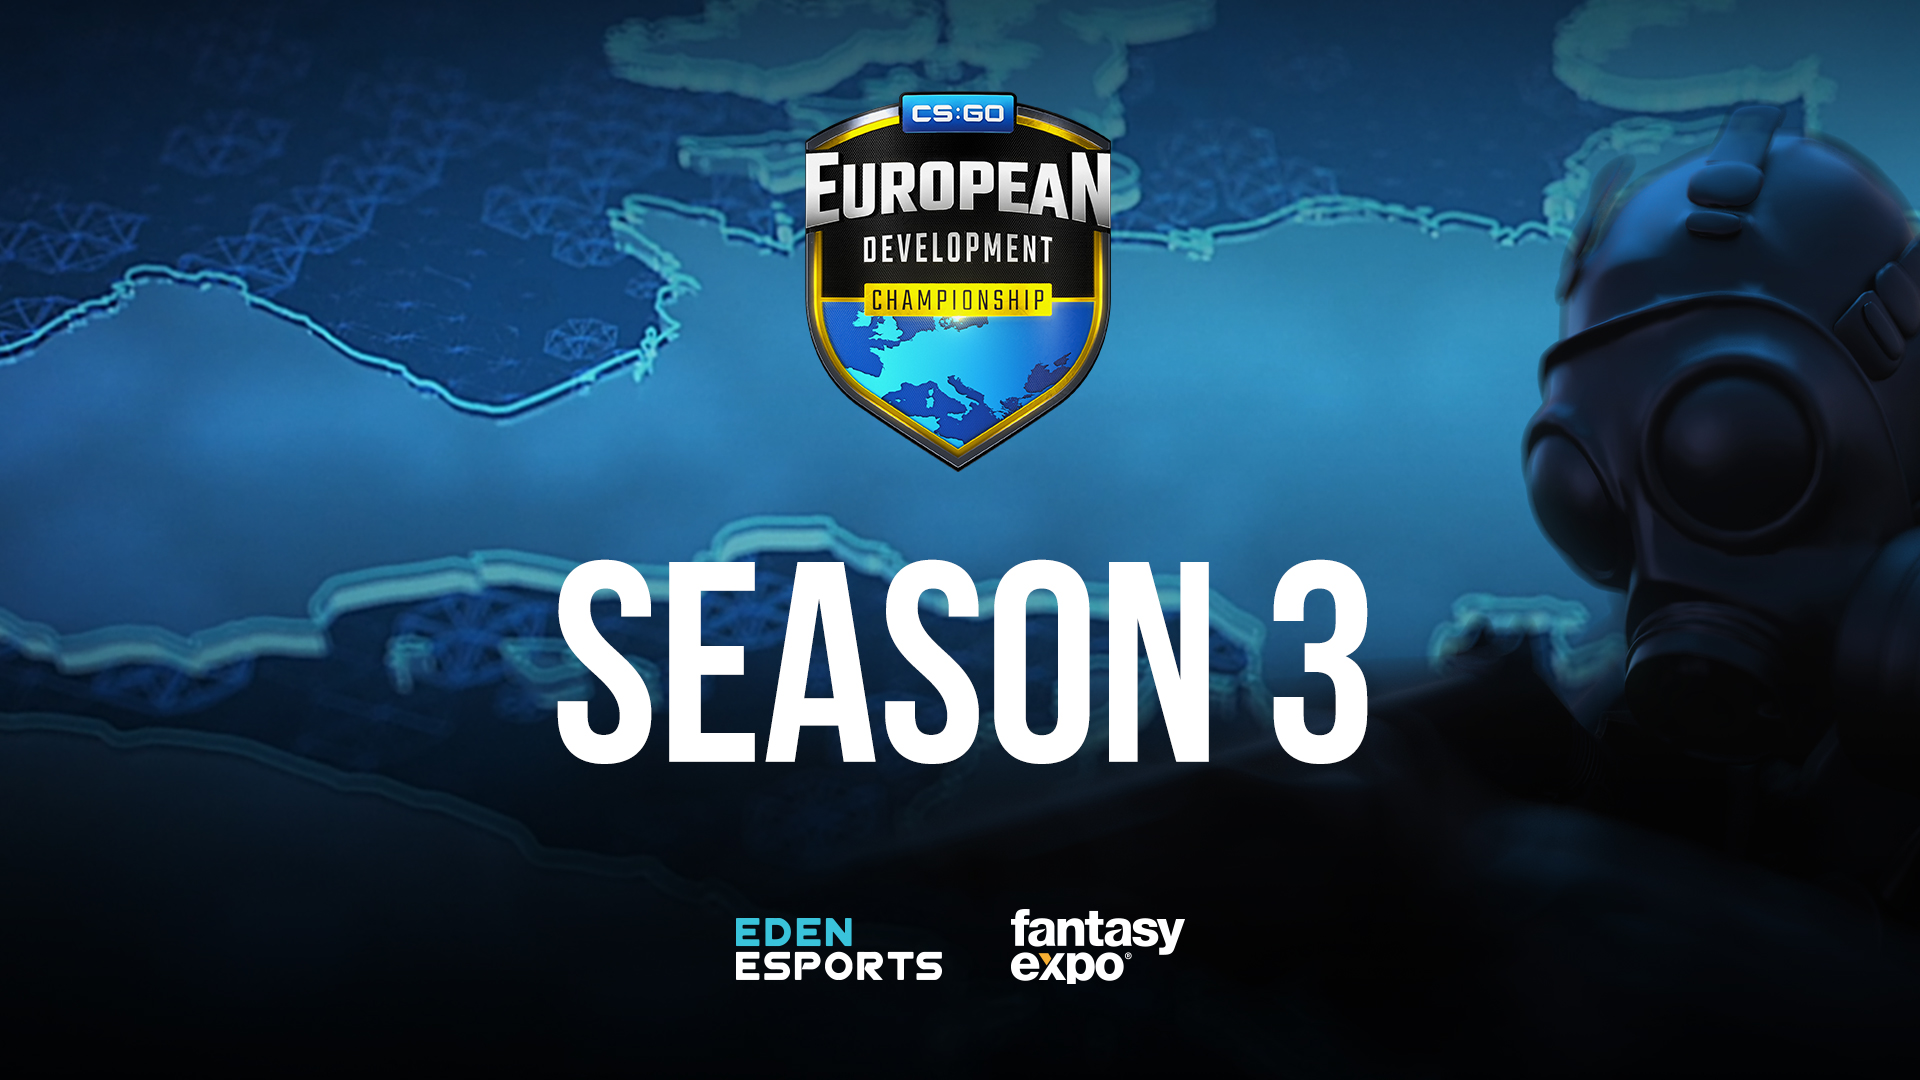 European Development Championship - season 3 sangal esportimes